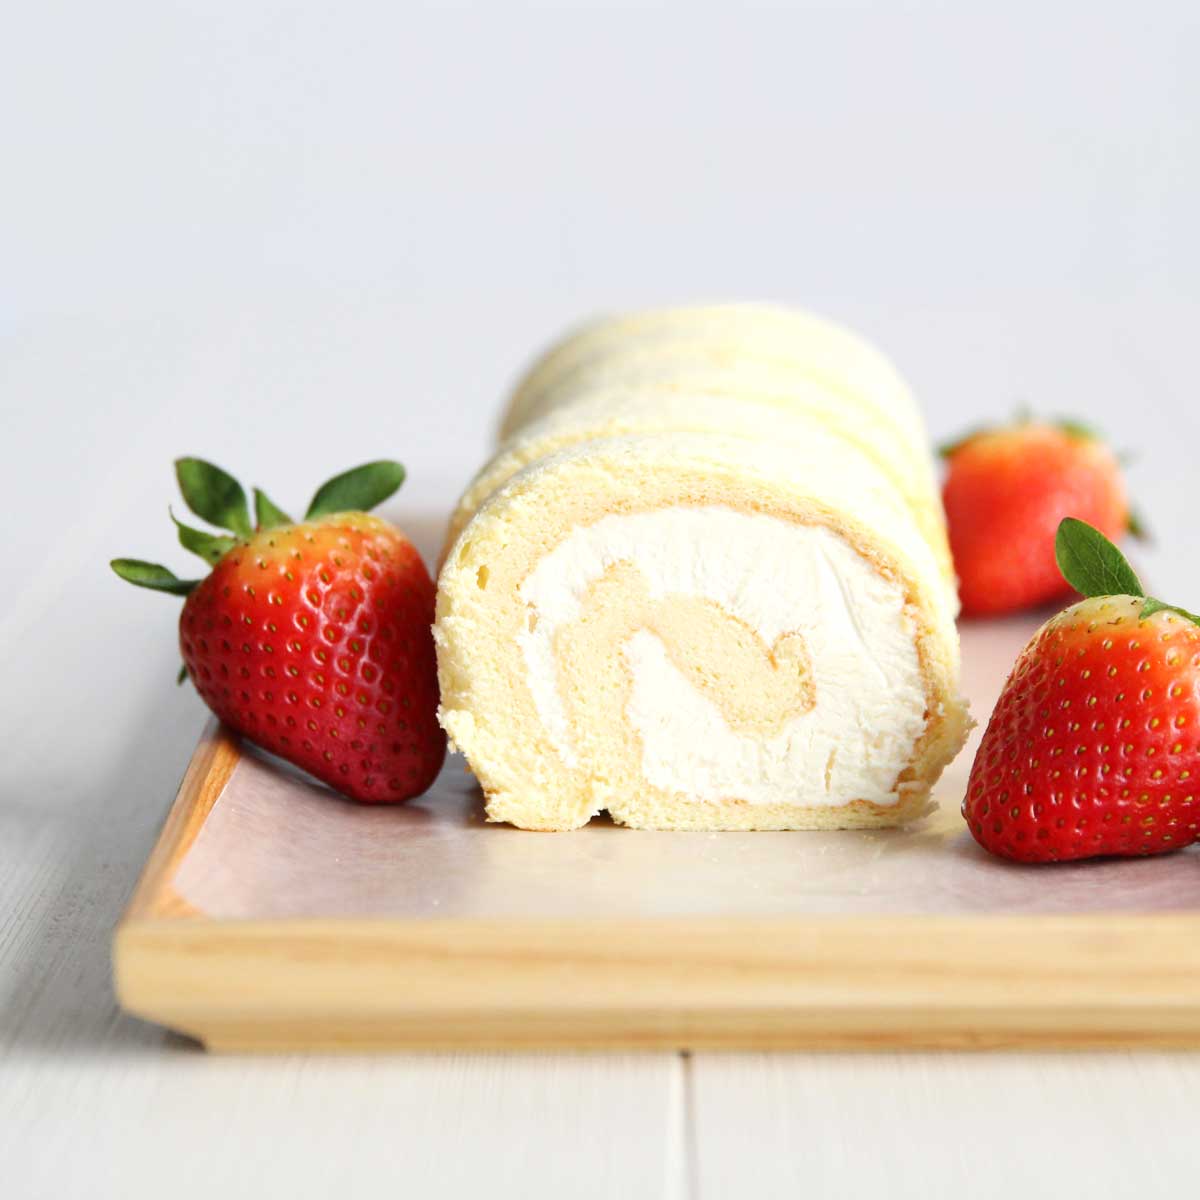 Unbelievably Soft Flourless Vanilla Swiss Roll Cake (Gluten-Free) - Strawberry Japanese Roll Cake